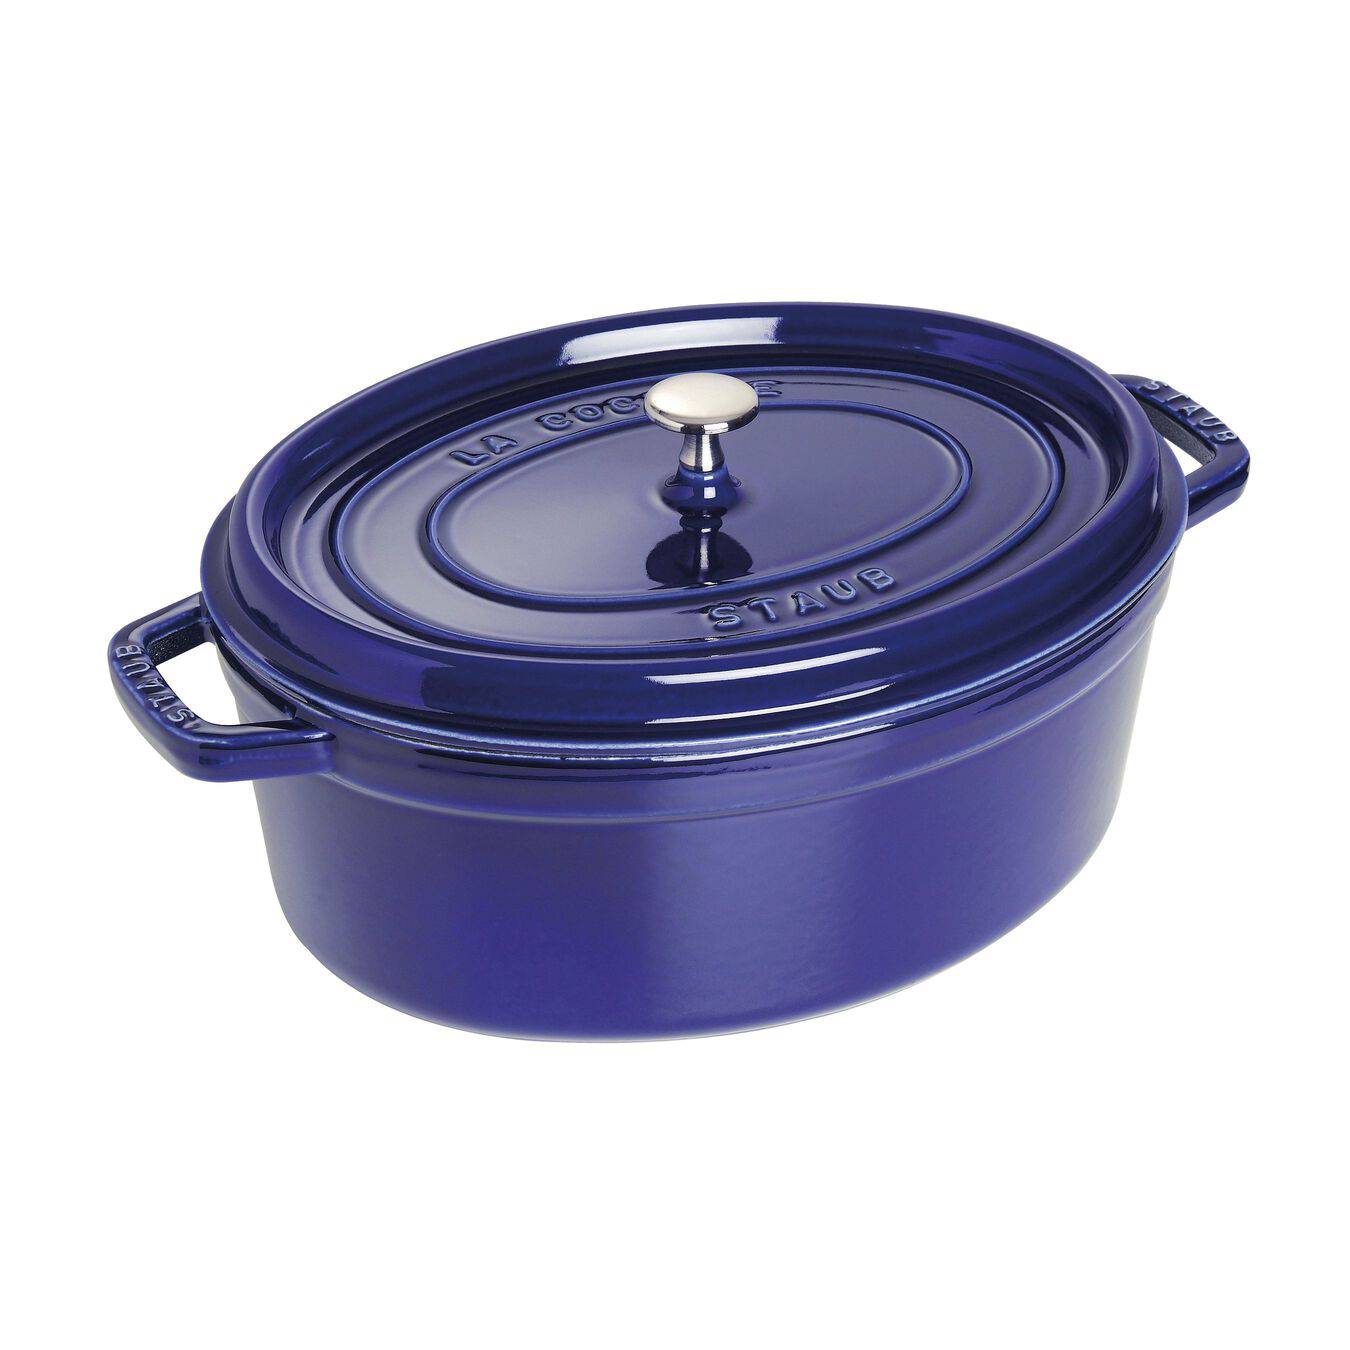 Staub Cast Iron Oval Cocotte Oven, 7-qt, Dark Blue - Kitchen Universe